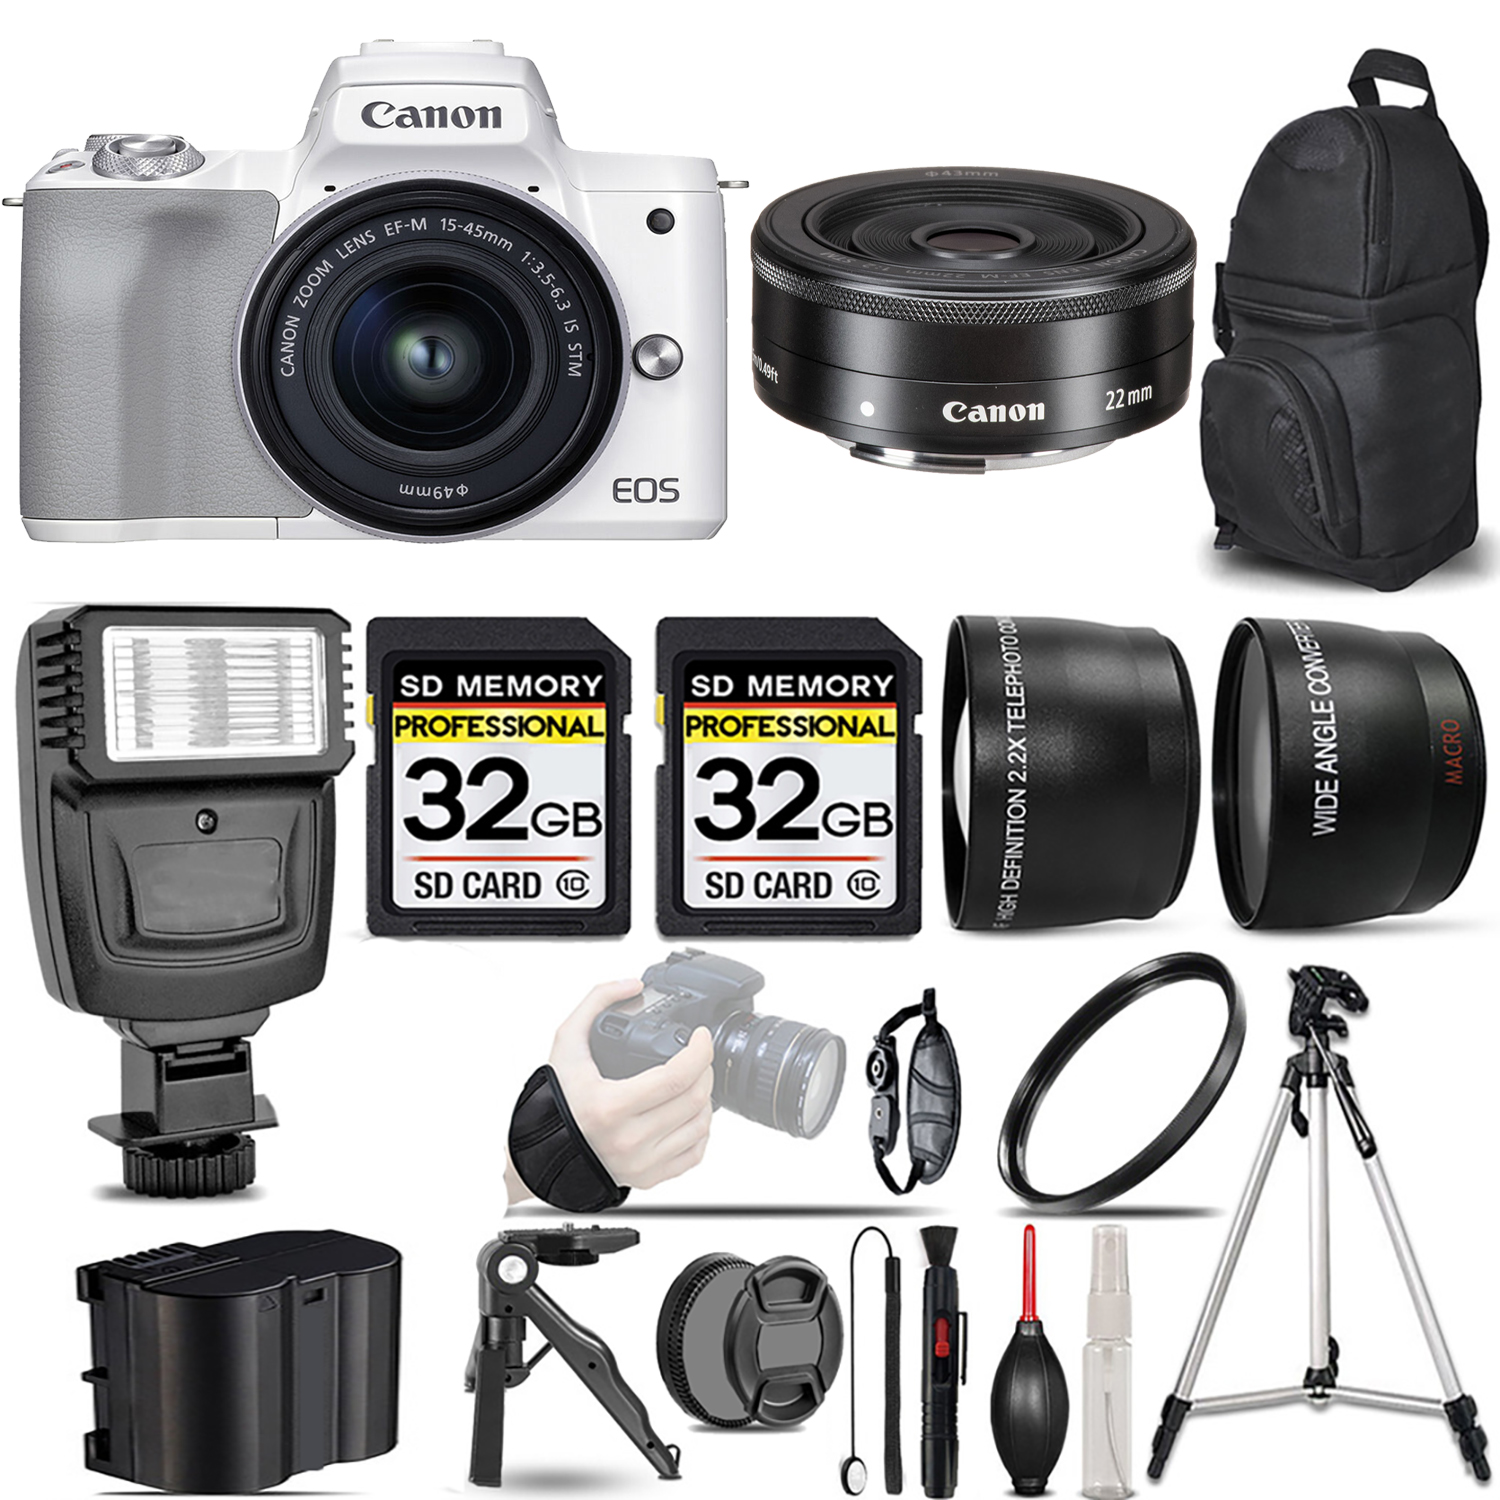 M50 Mark II + 15-45mm Lens (White) + 22mm f/2 STM Lens + Flash + 64GB - Kit *FREE SHIPPING*